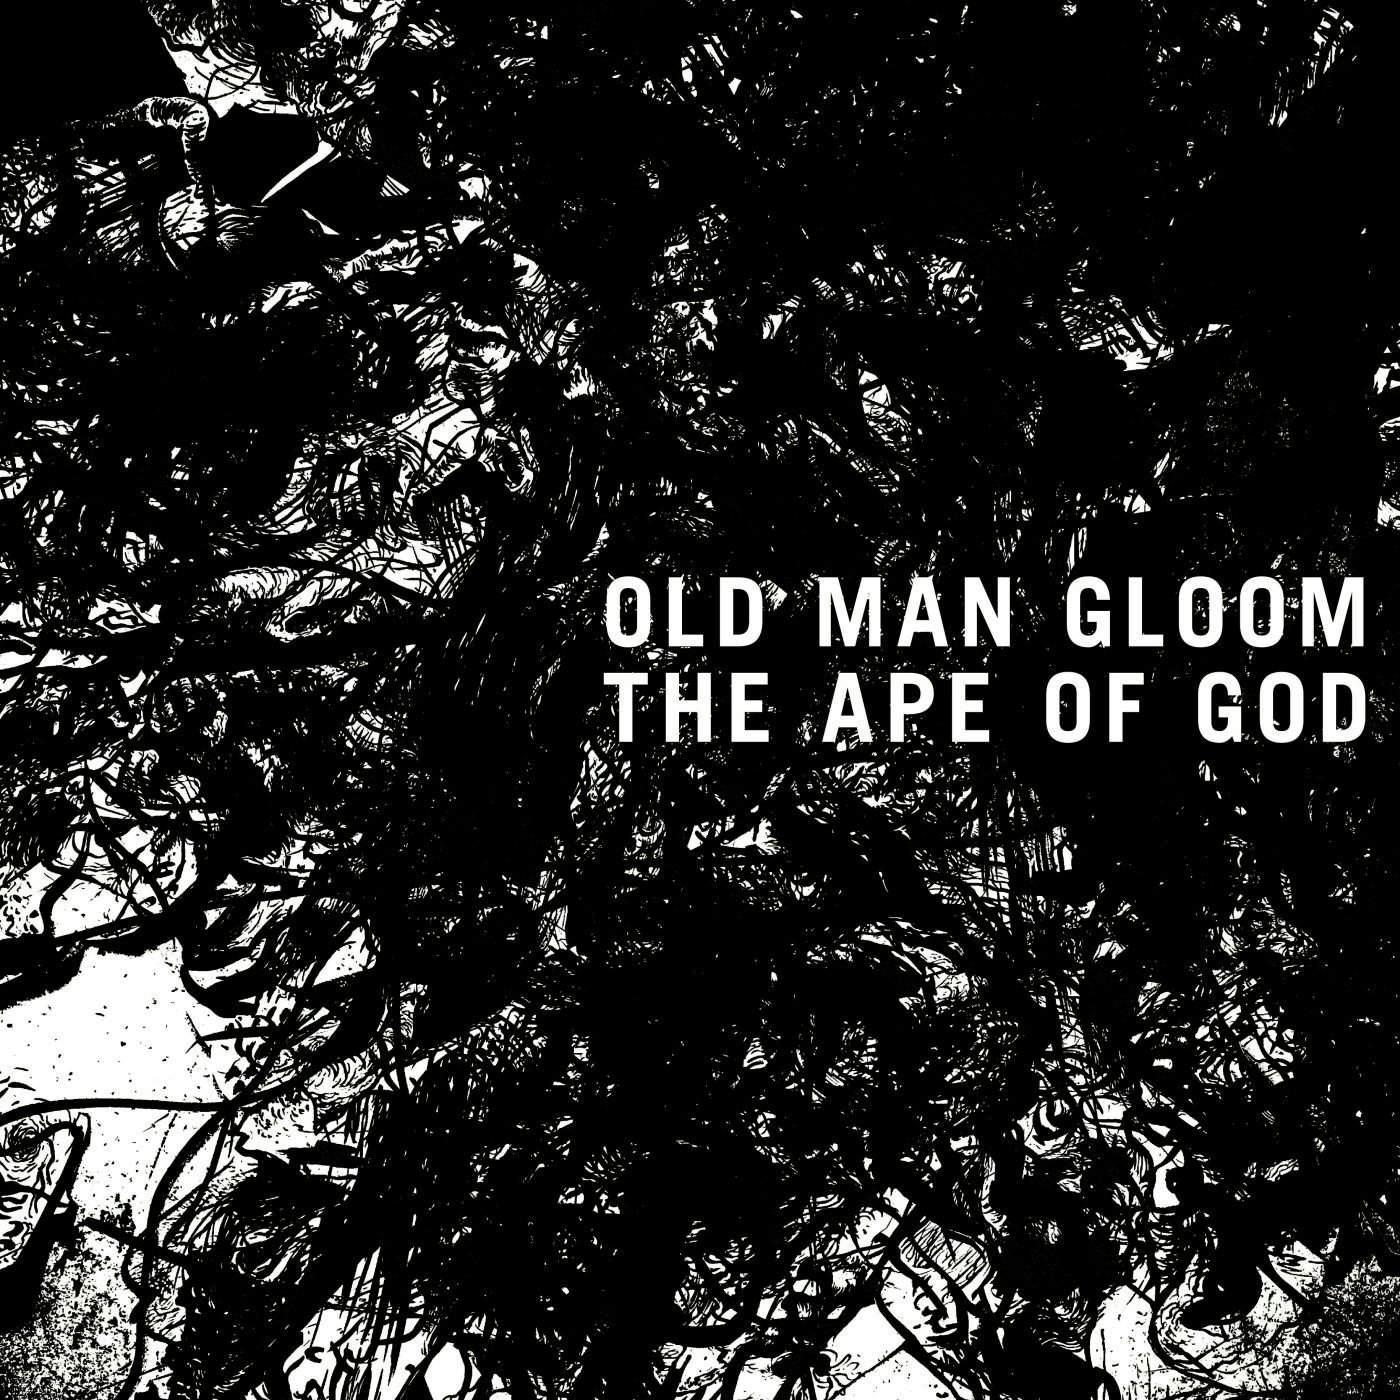 Old Man Gloom APE OF GOD Vinyl Record